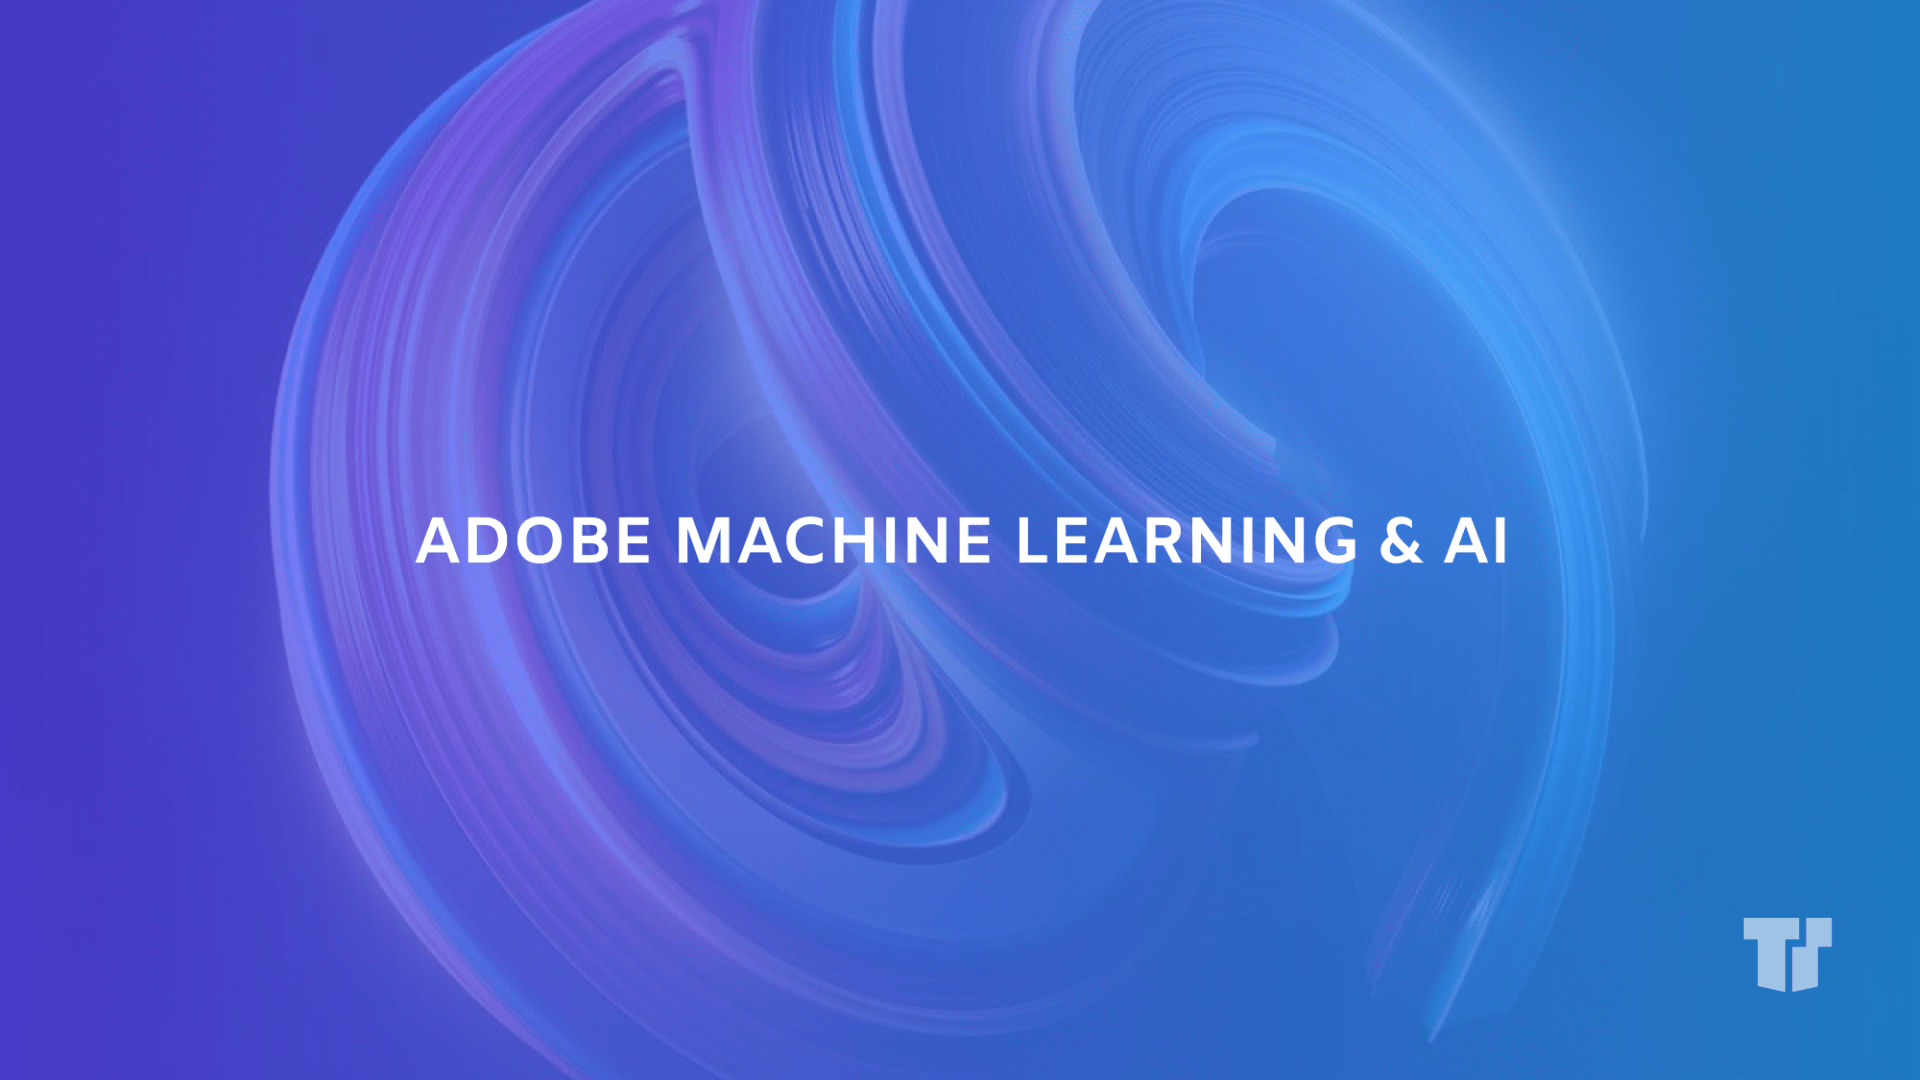 Analyzing Adobe: Machine Learning & AI cover image